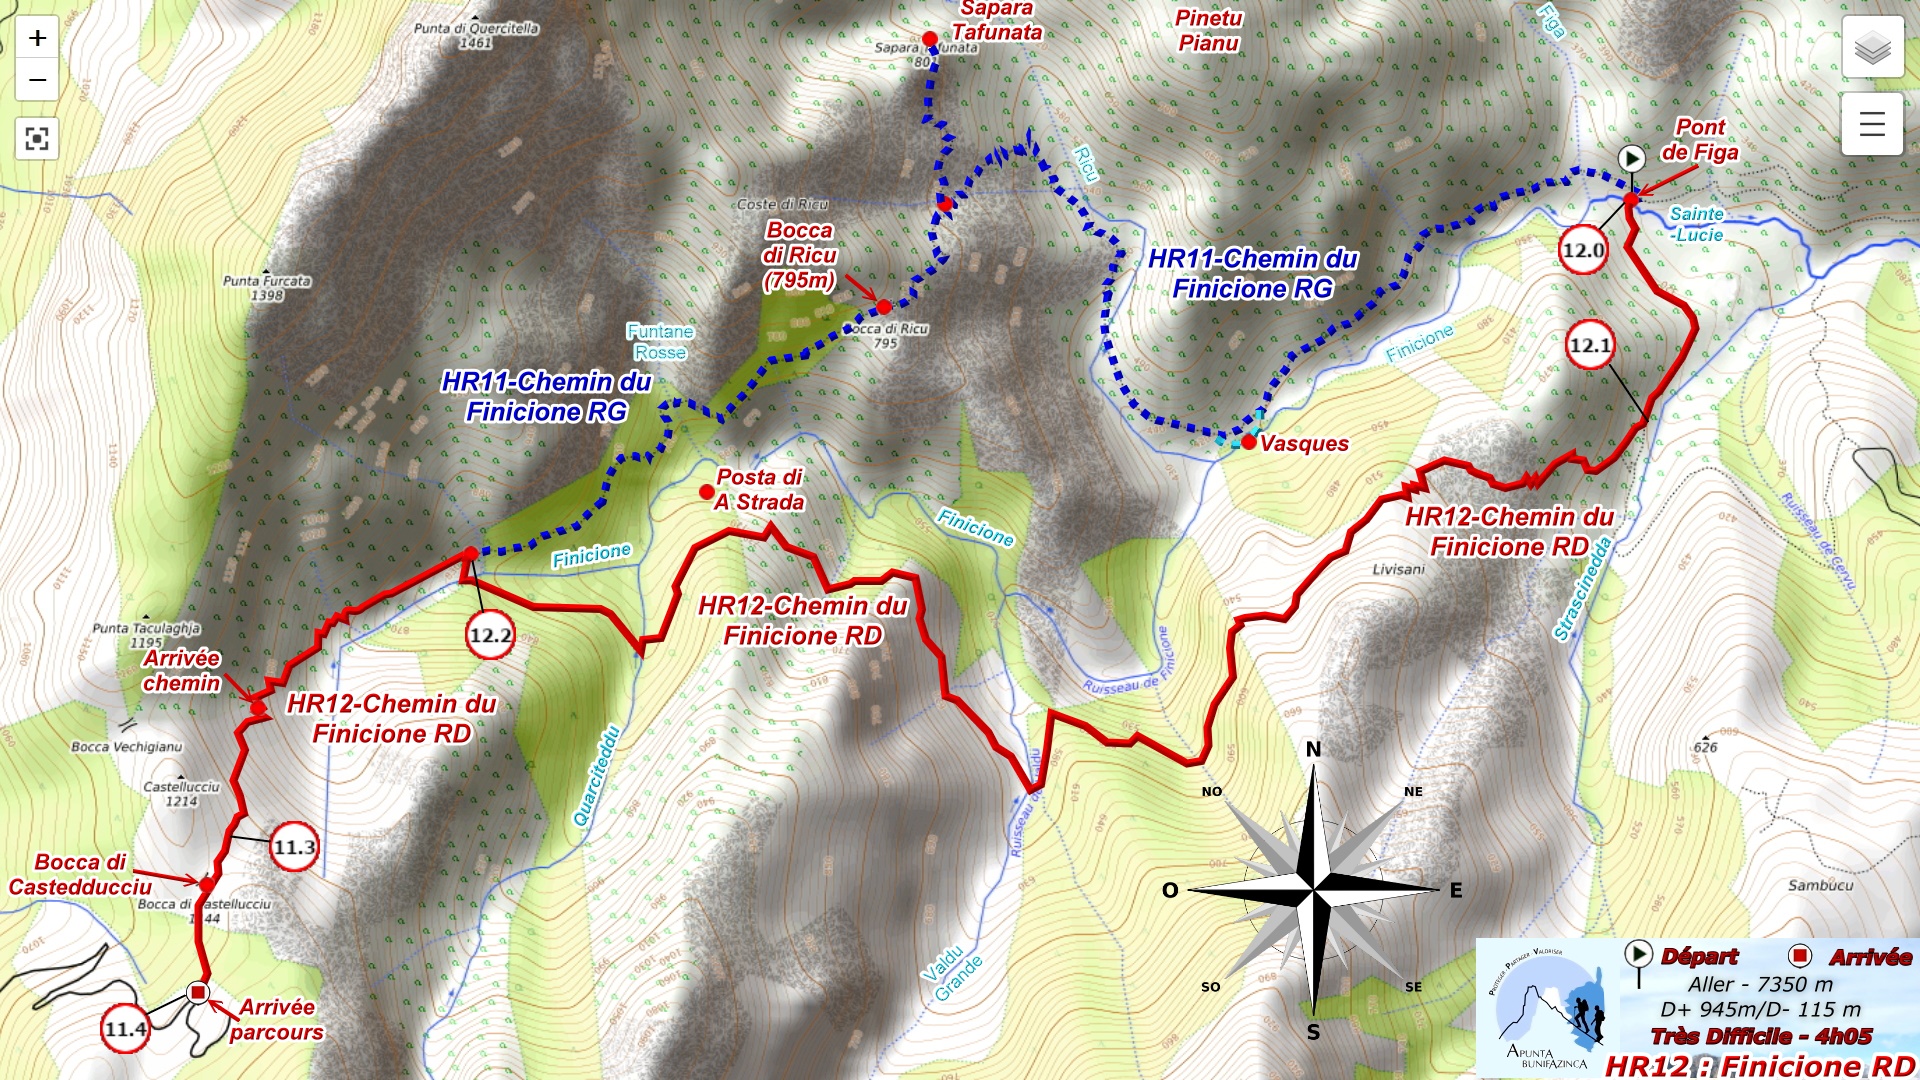 Plan HR12 : Chemin du Castedducciu par le Finicione RD